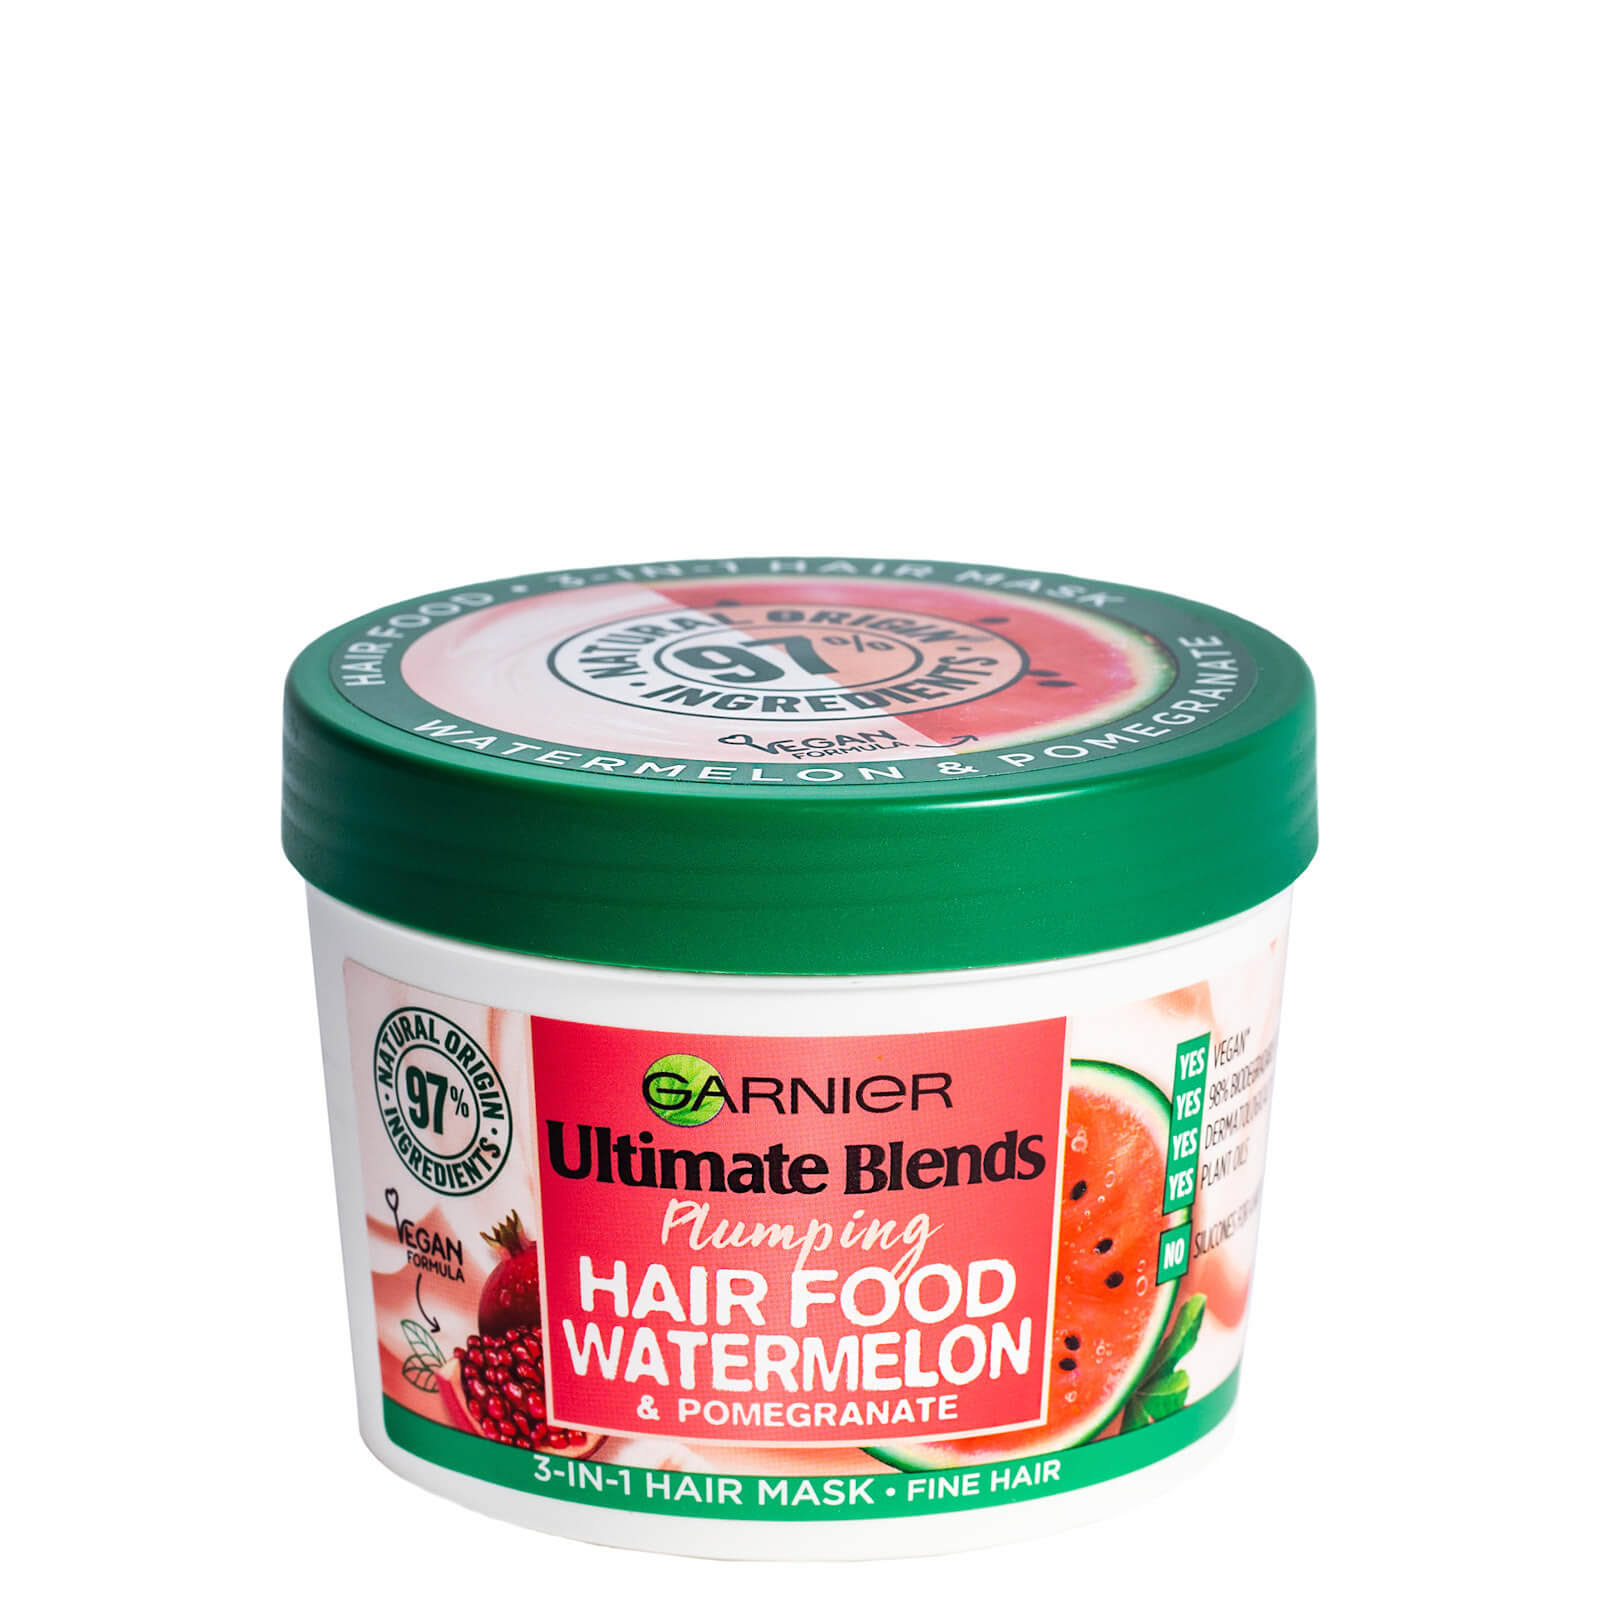 Garnier Ultimate Blends Plumping Hair Food Watermelon 3-in-1 Fine Hair